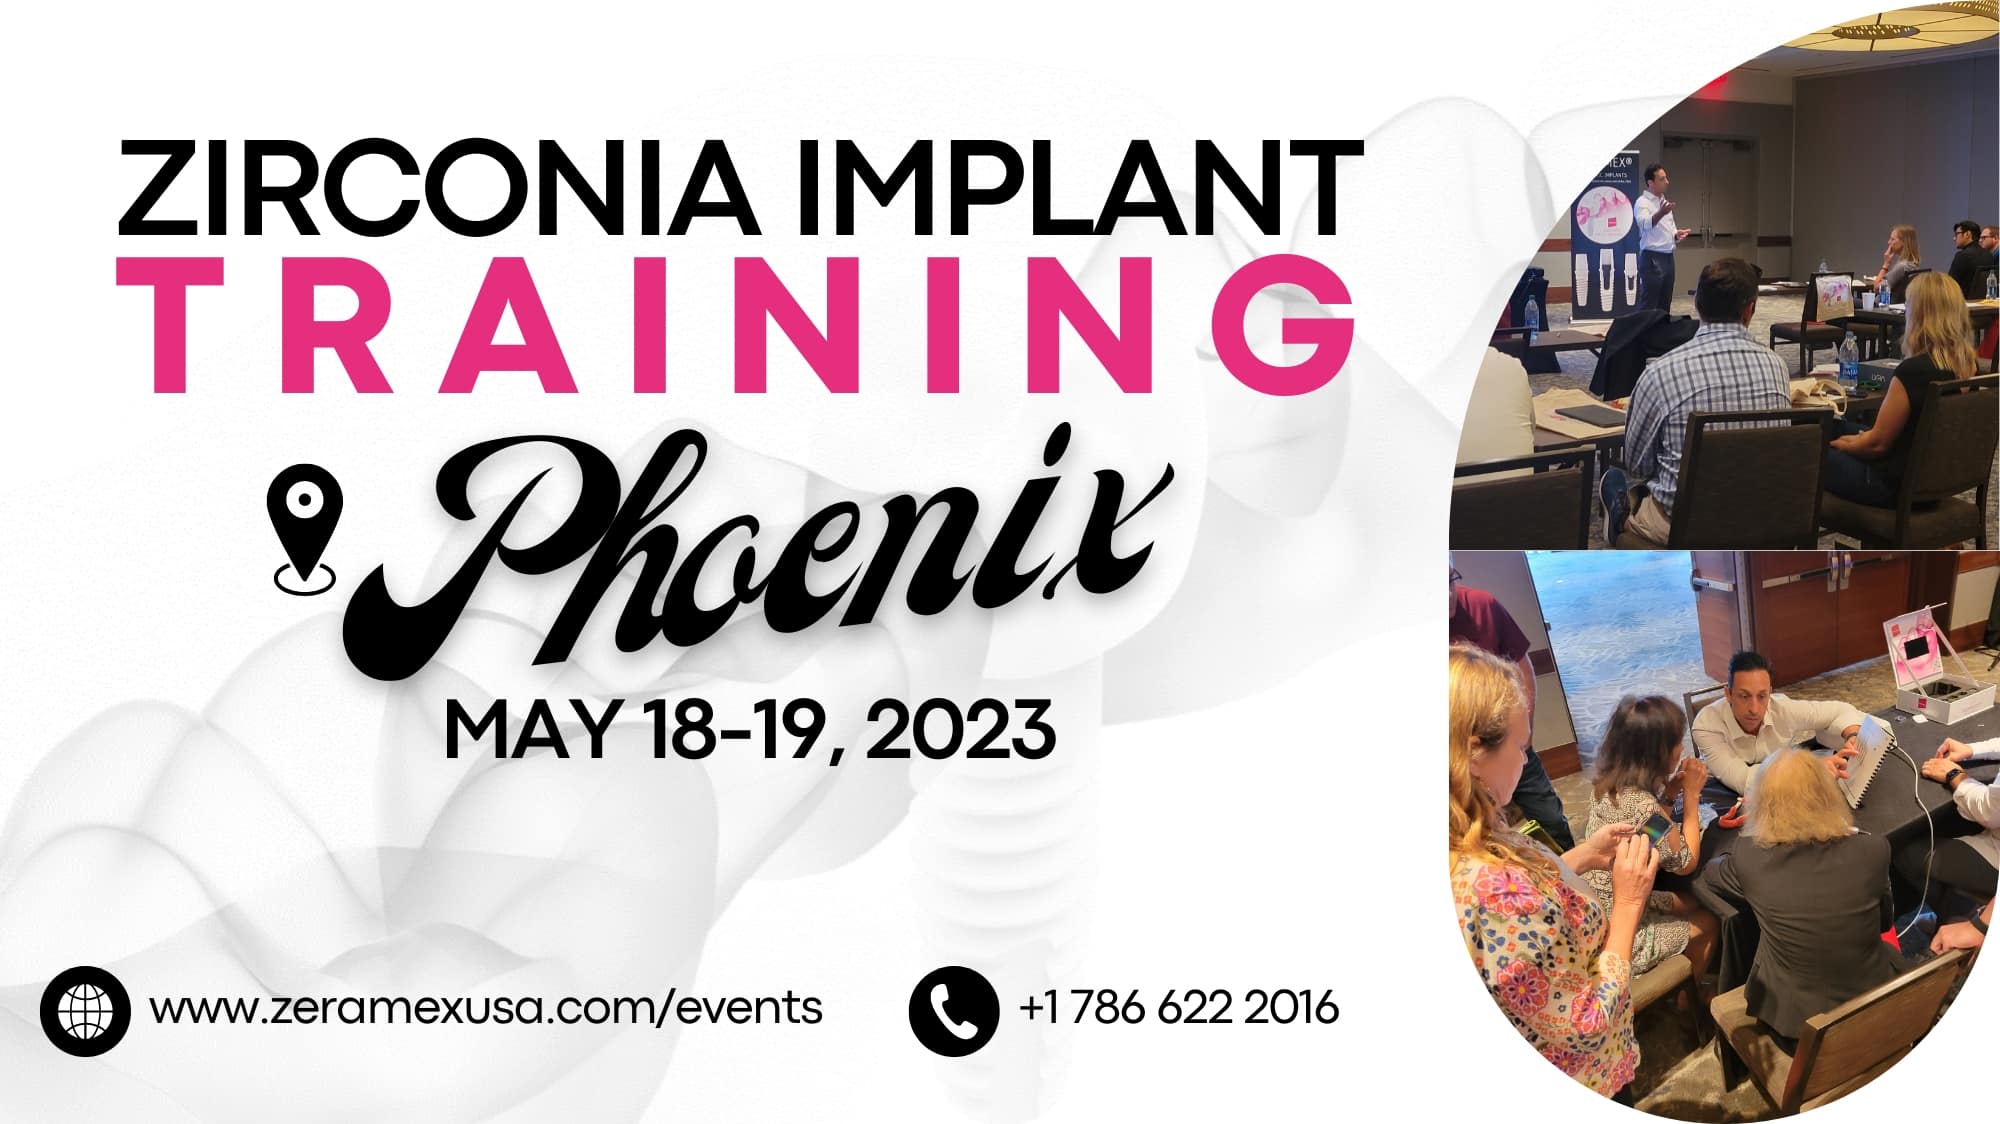 zeramexusa_zirconia implant training_phoenix_2023